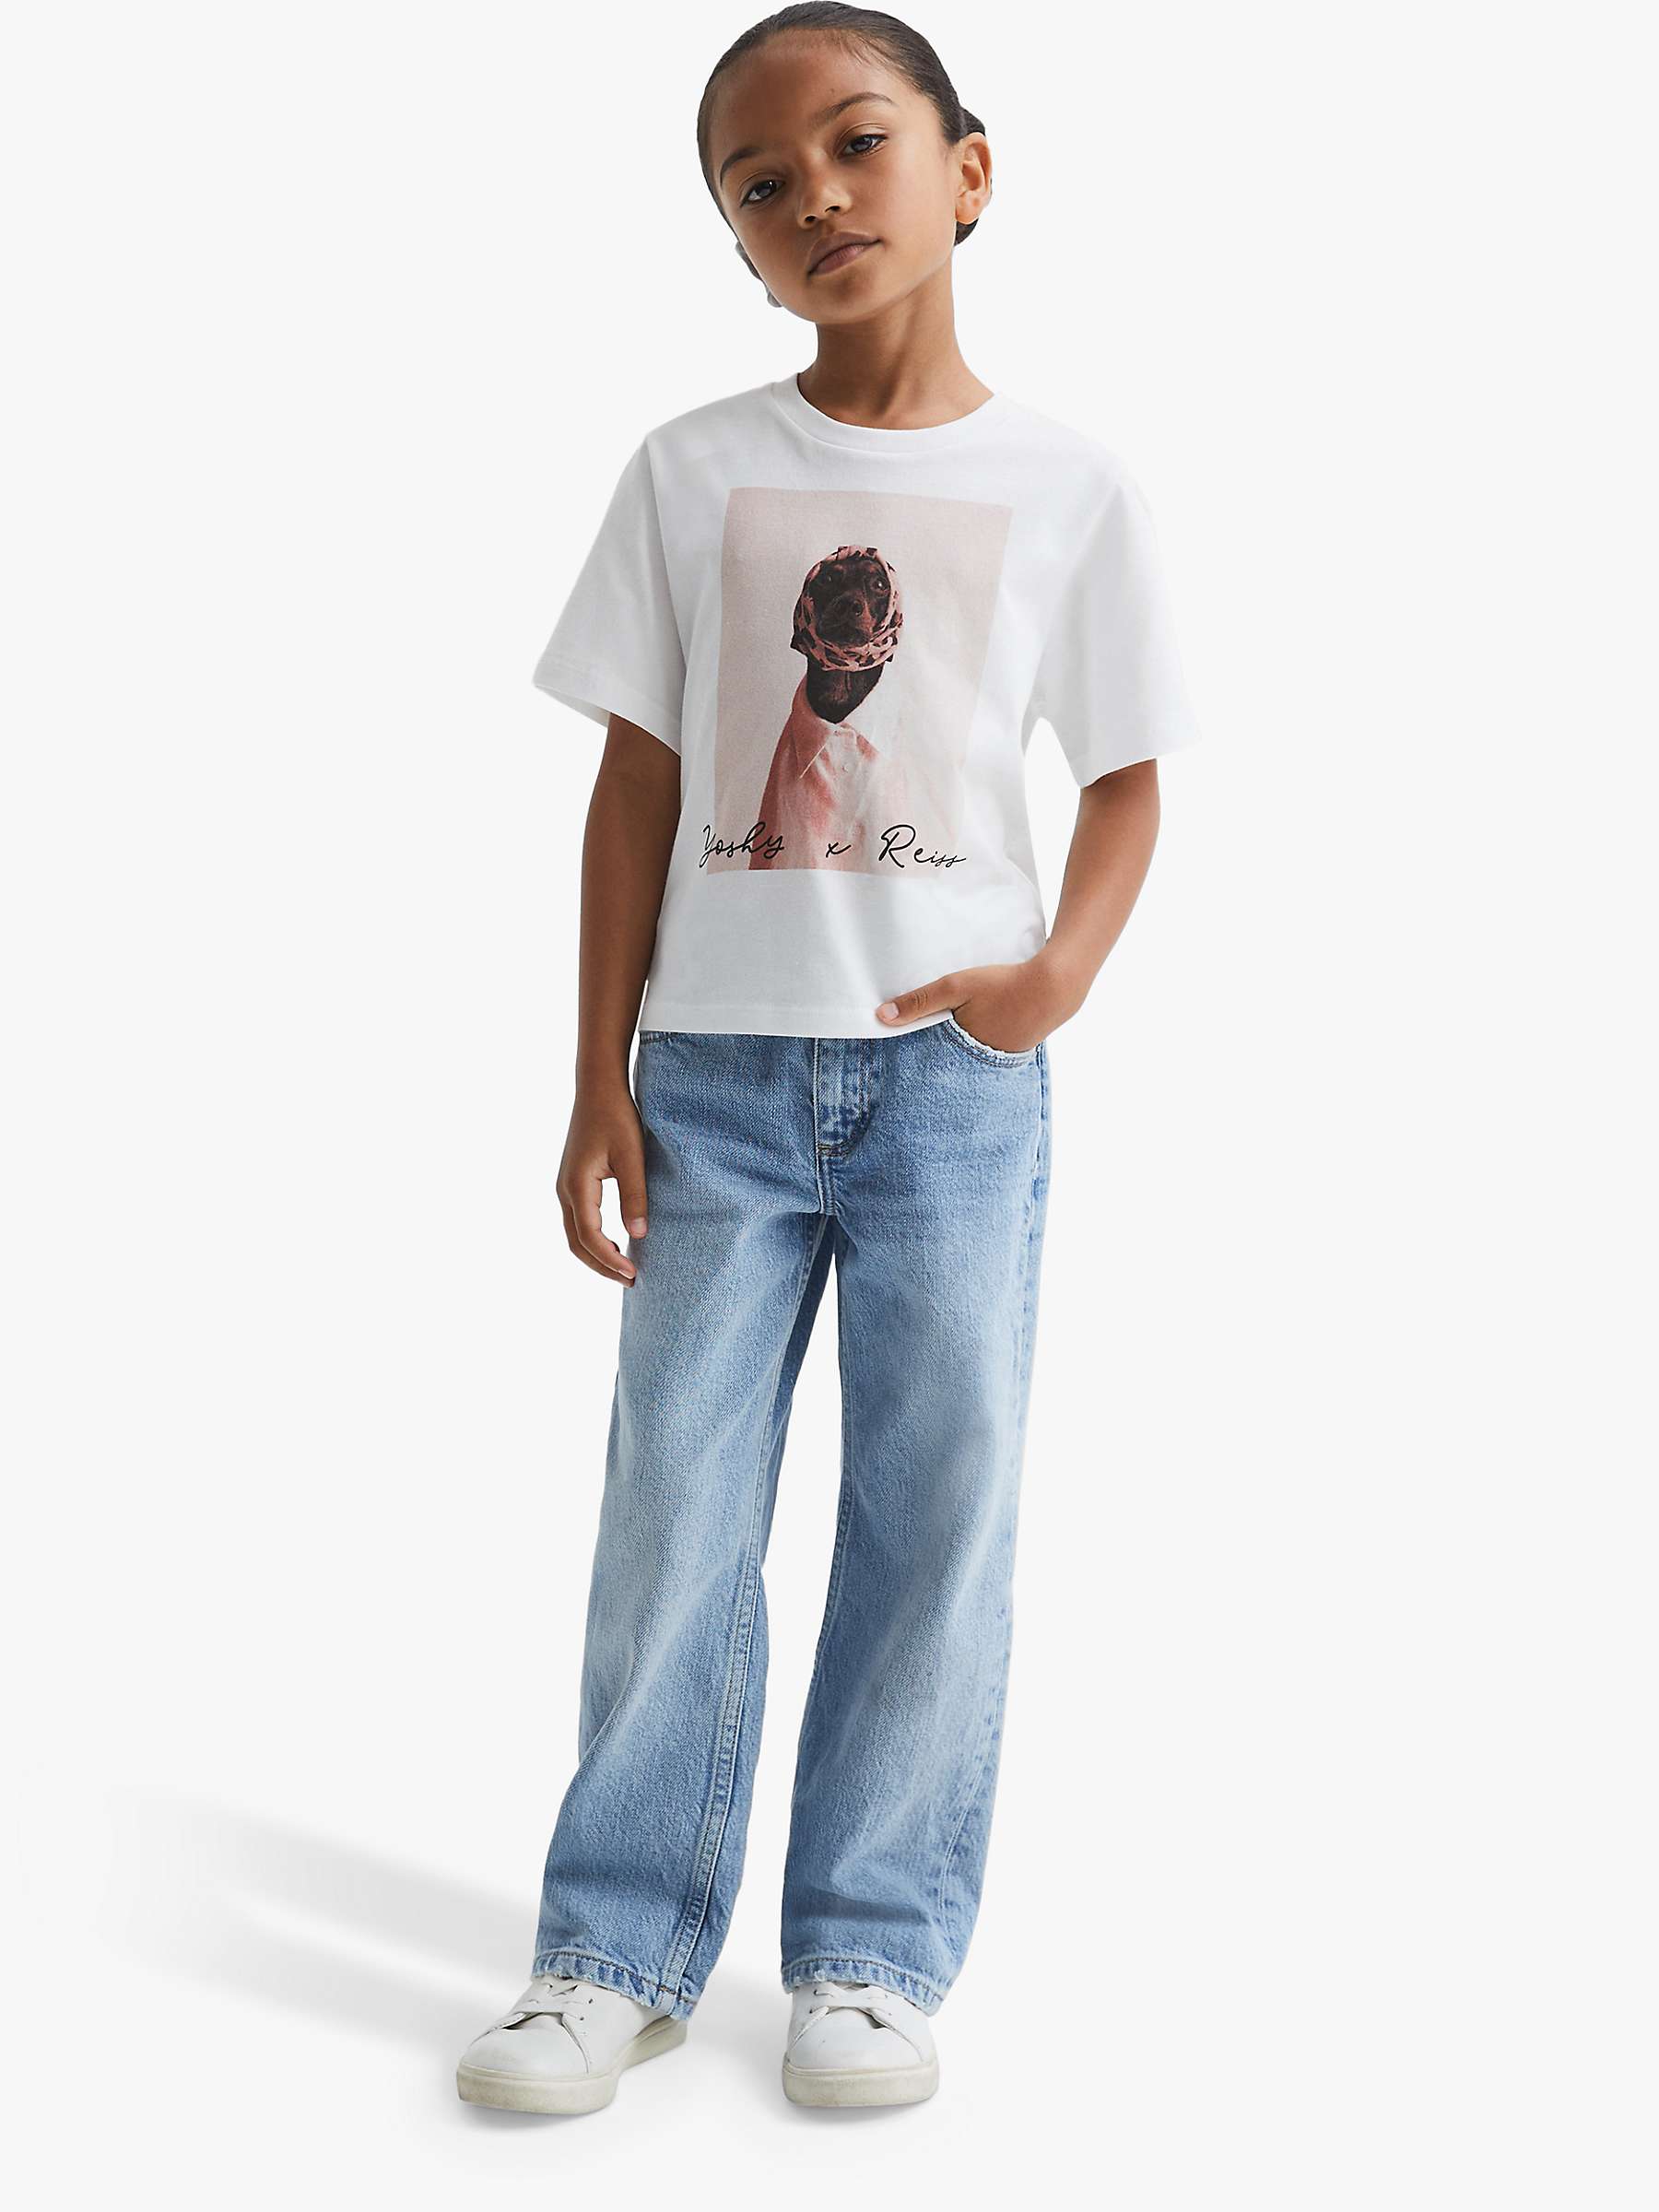 Buy Reiss Kids' Yoshy Print Crew Neck T-Shirt, White Online at johnlewis.com